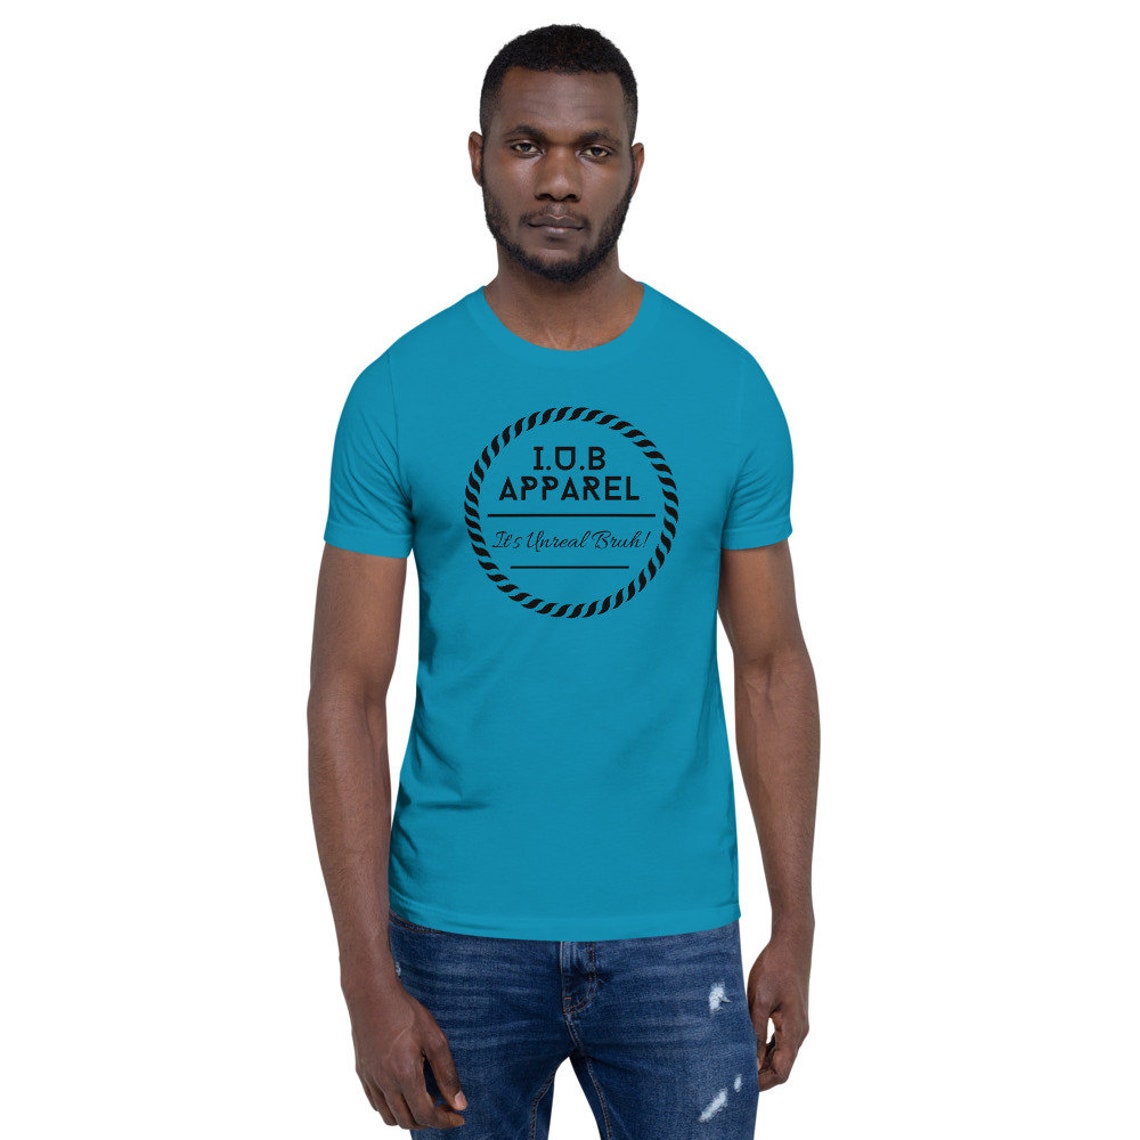 I.U.B. APPAREL LOGO Short-Sleeve Unisex T-Shirt | Etsy